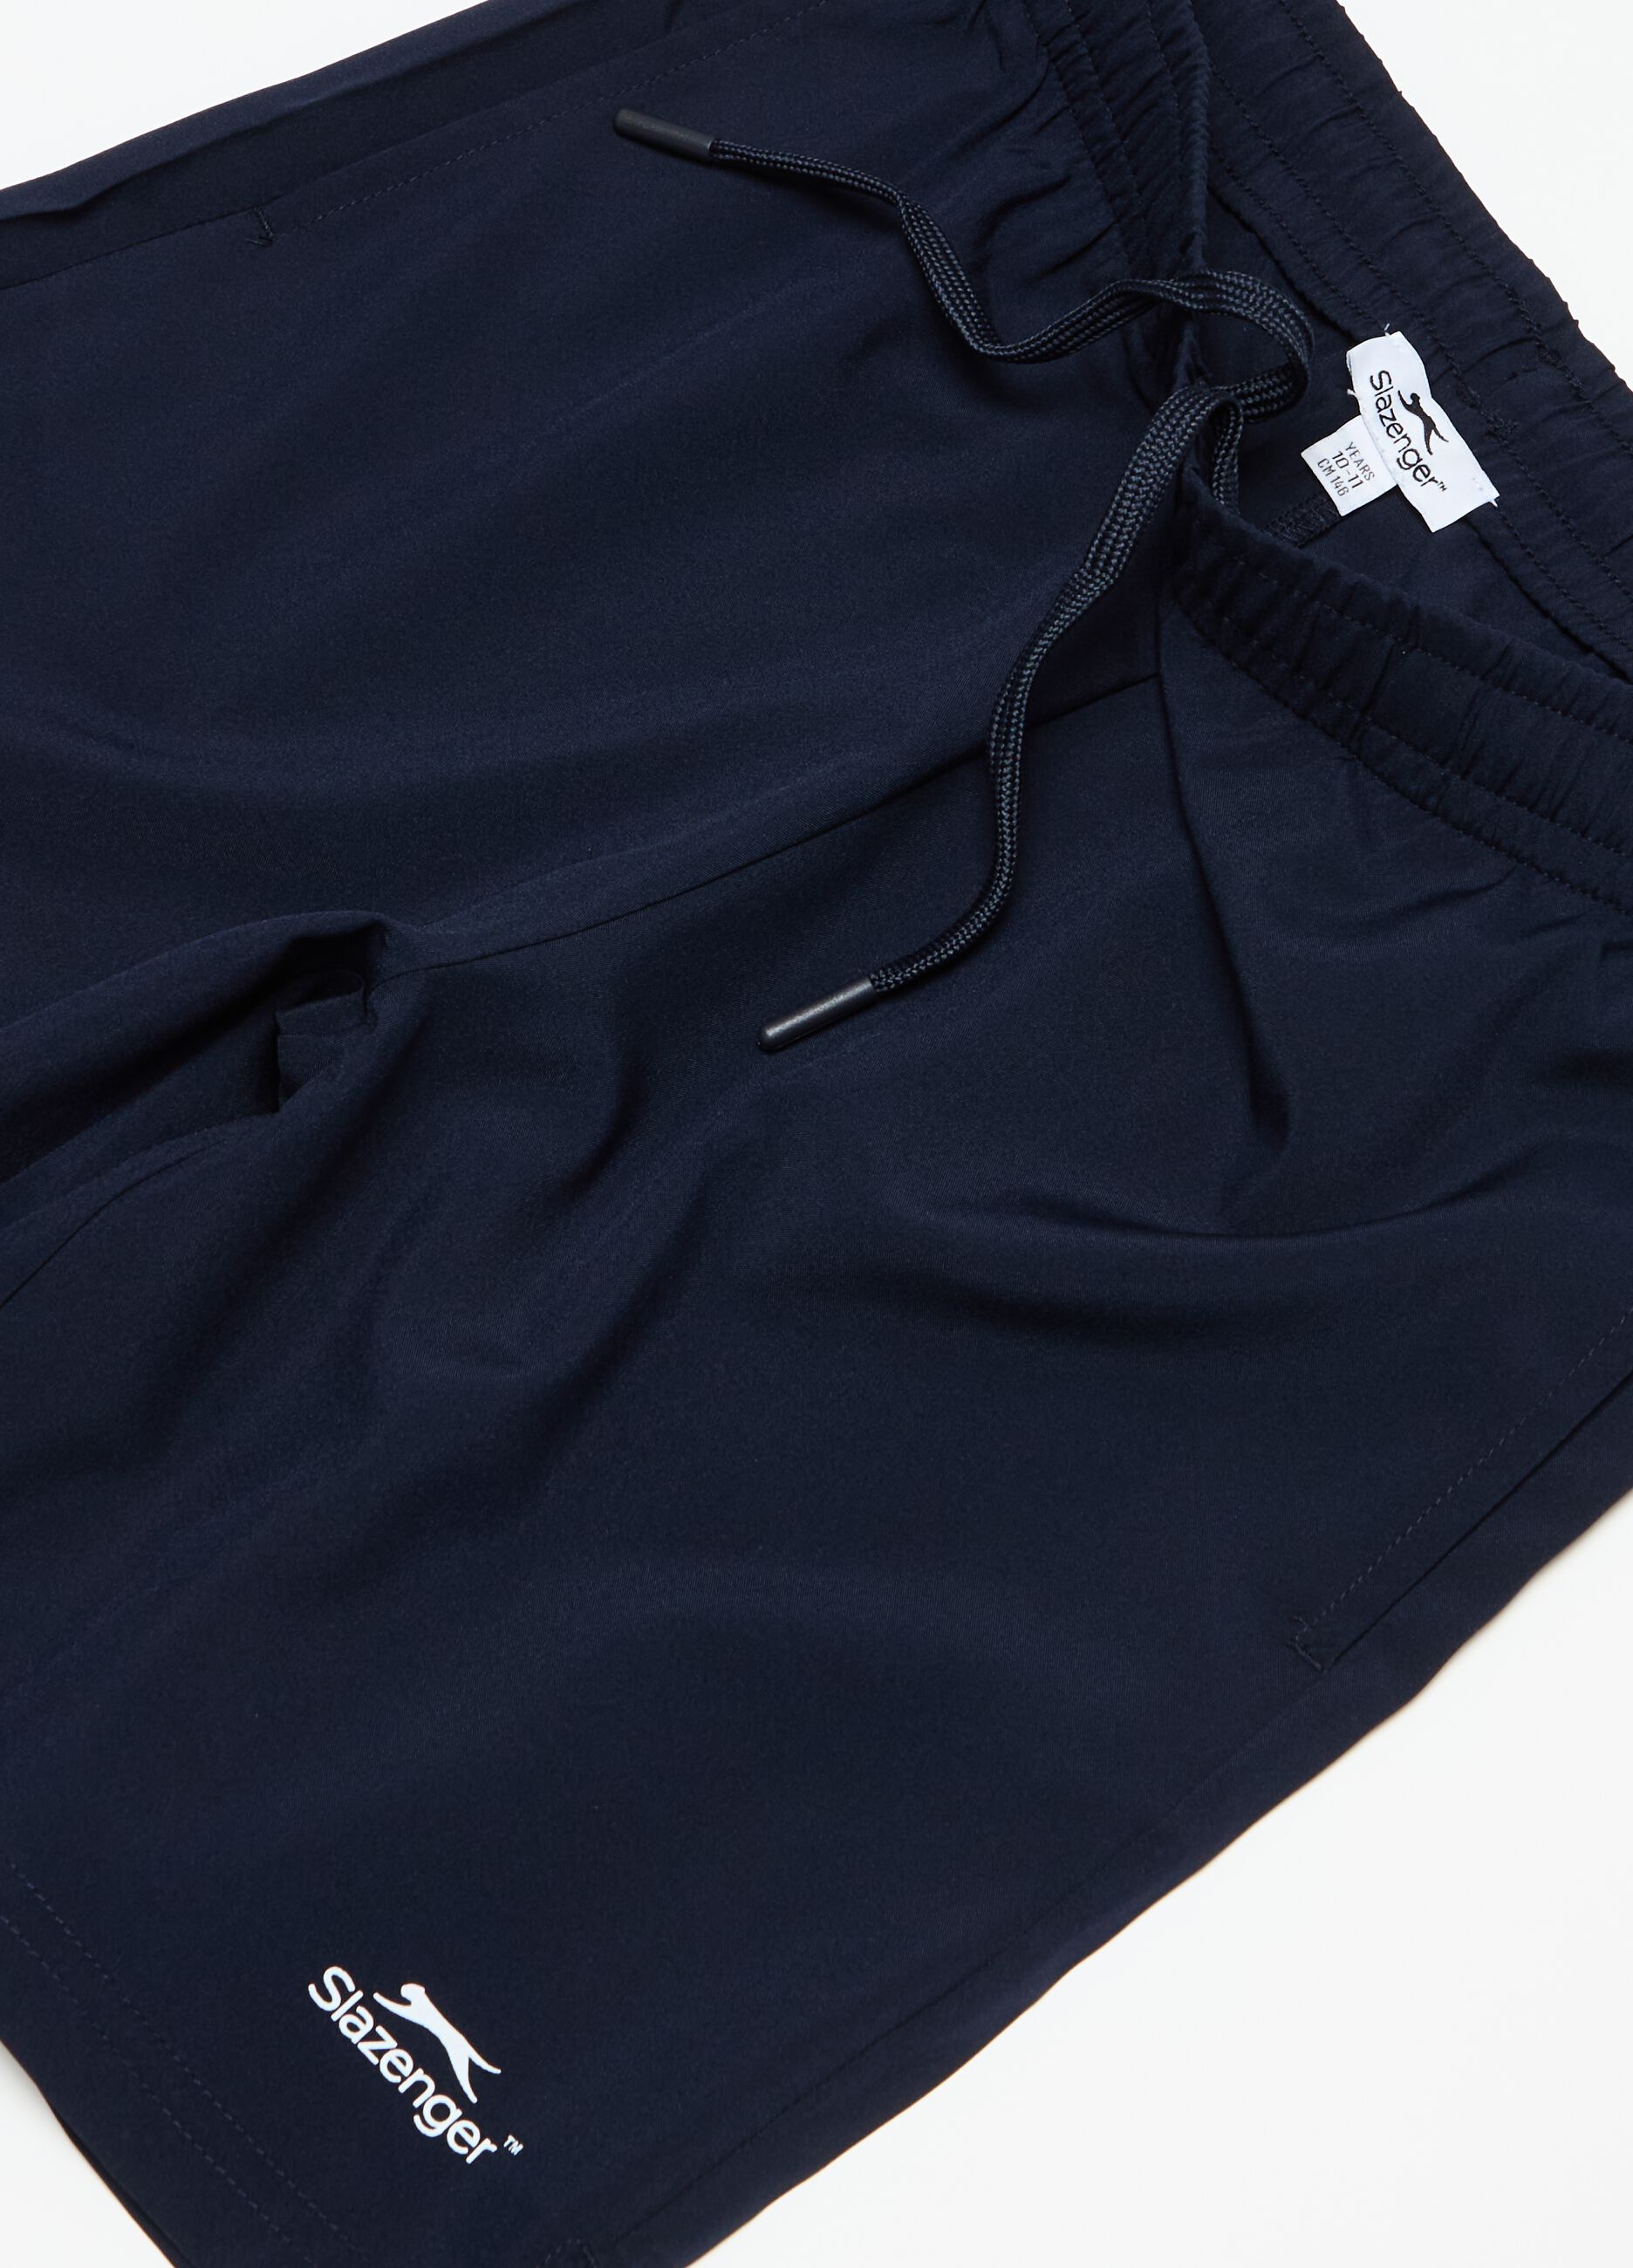 Quick-dry Bermuda tennis shorts with Slazenger print